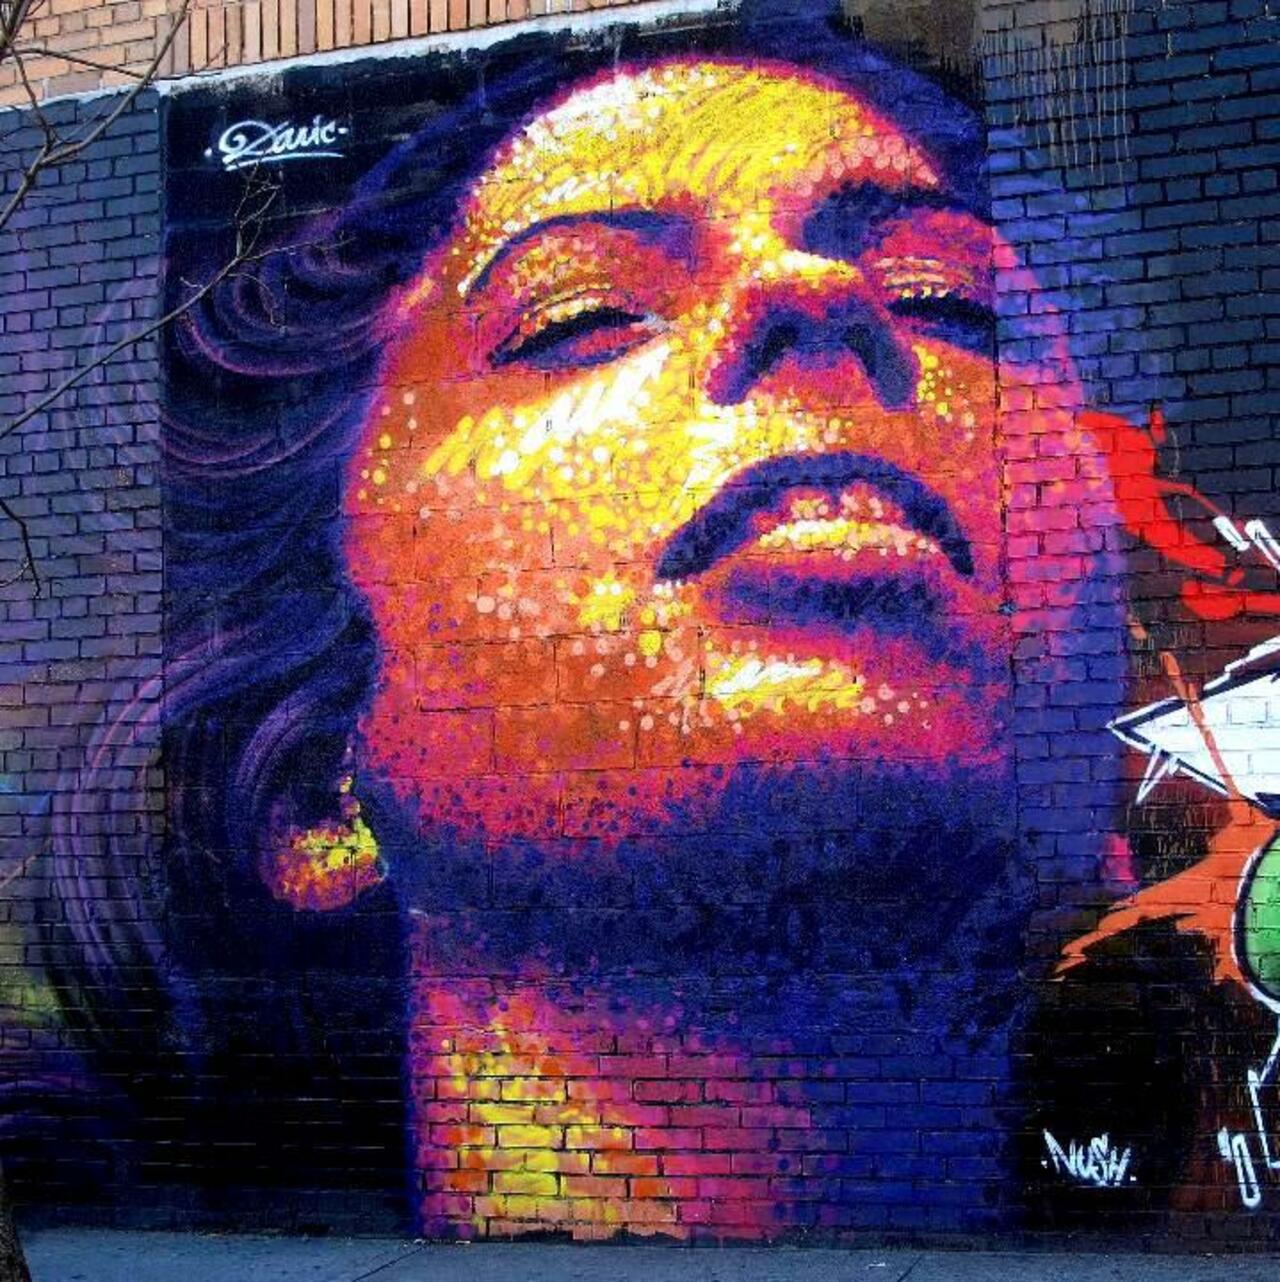 Dasic 
South Bronx
#streetart #art #graffiti #mural http://t.co/3L7nvOaw3v